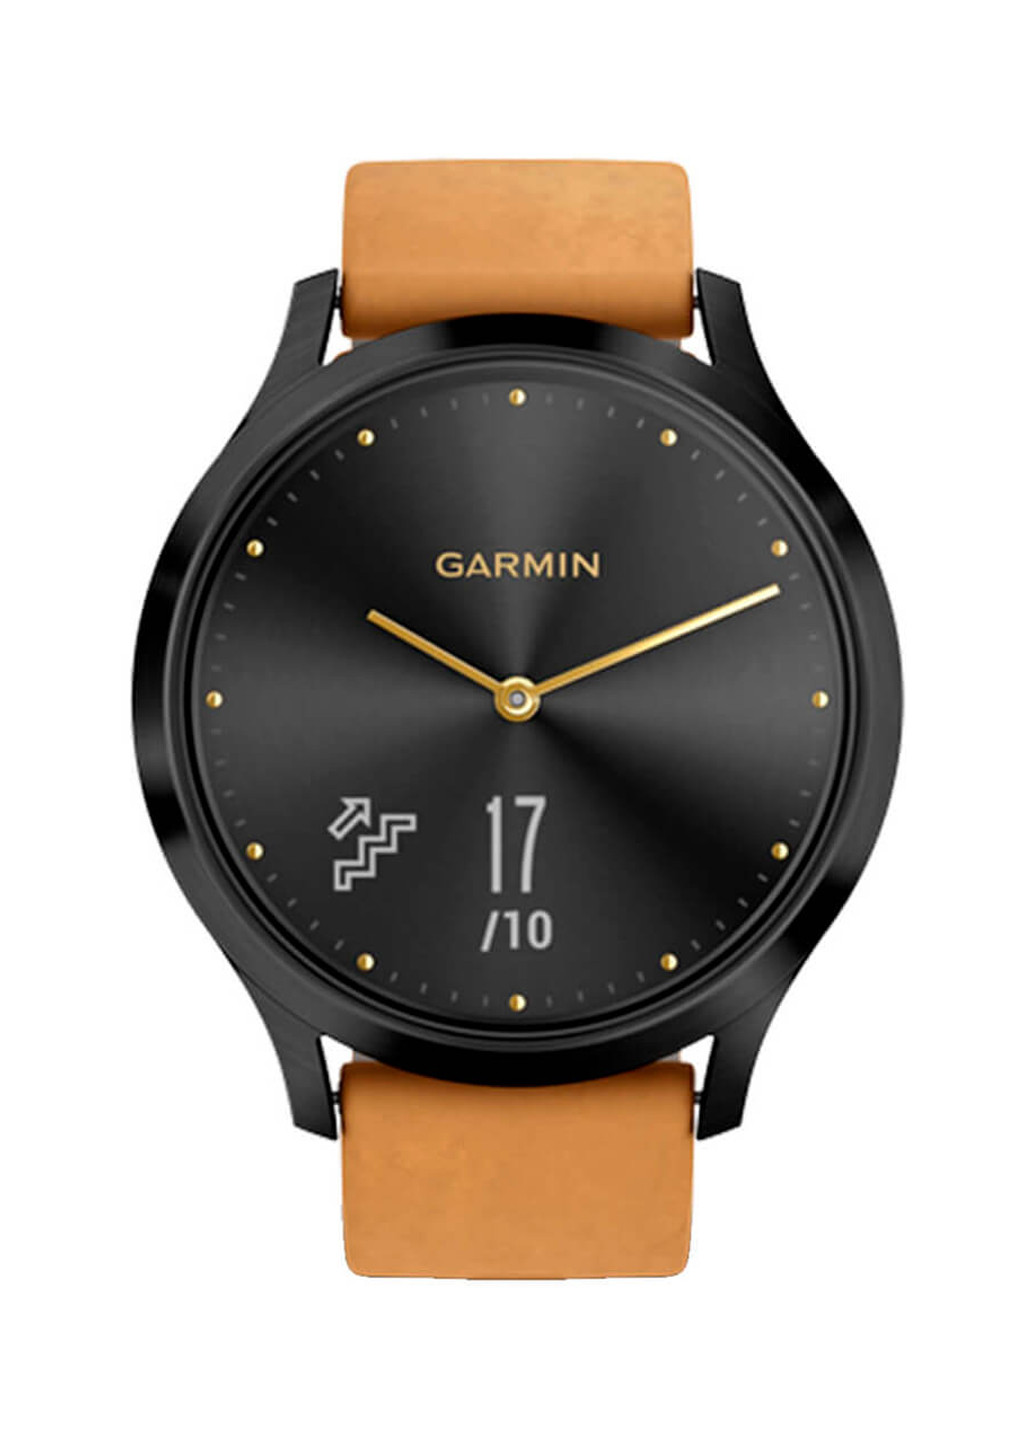   Garmin vivomove hr premium black with tan suede leather & black silicone bands (010-01850-00/a0) (132572801)